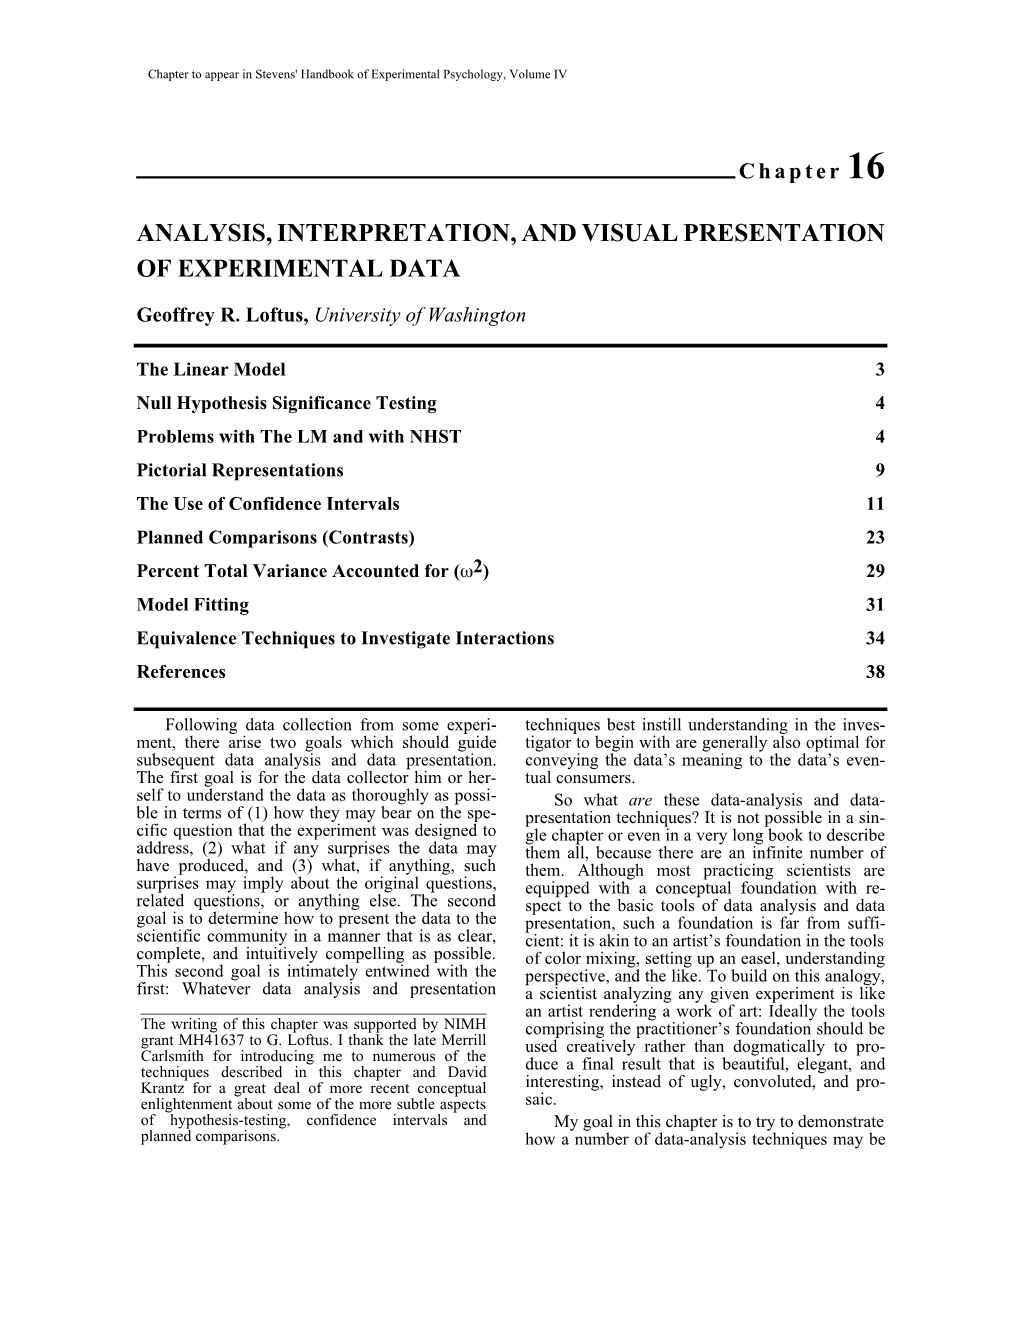 Analysis, Interpretation, and Visual Presentation of Experimental Data